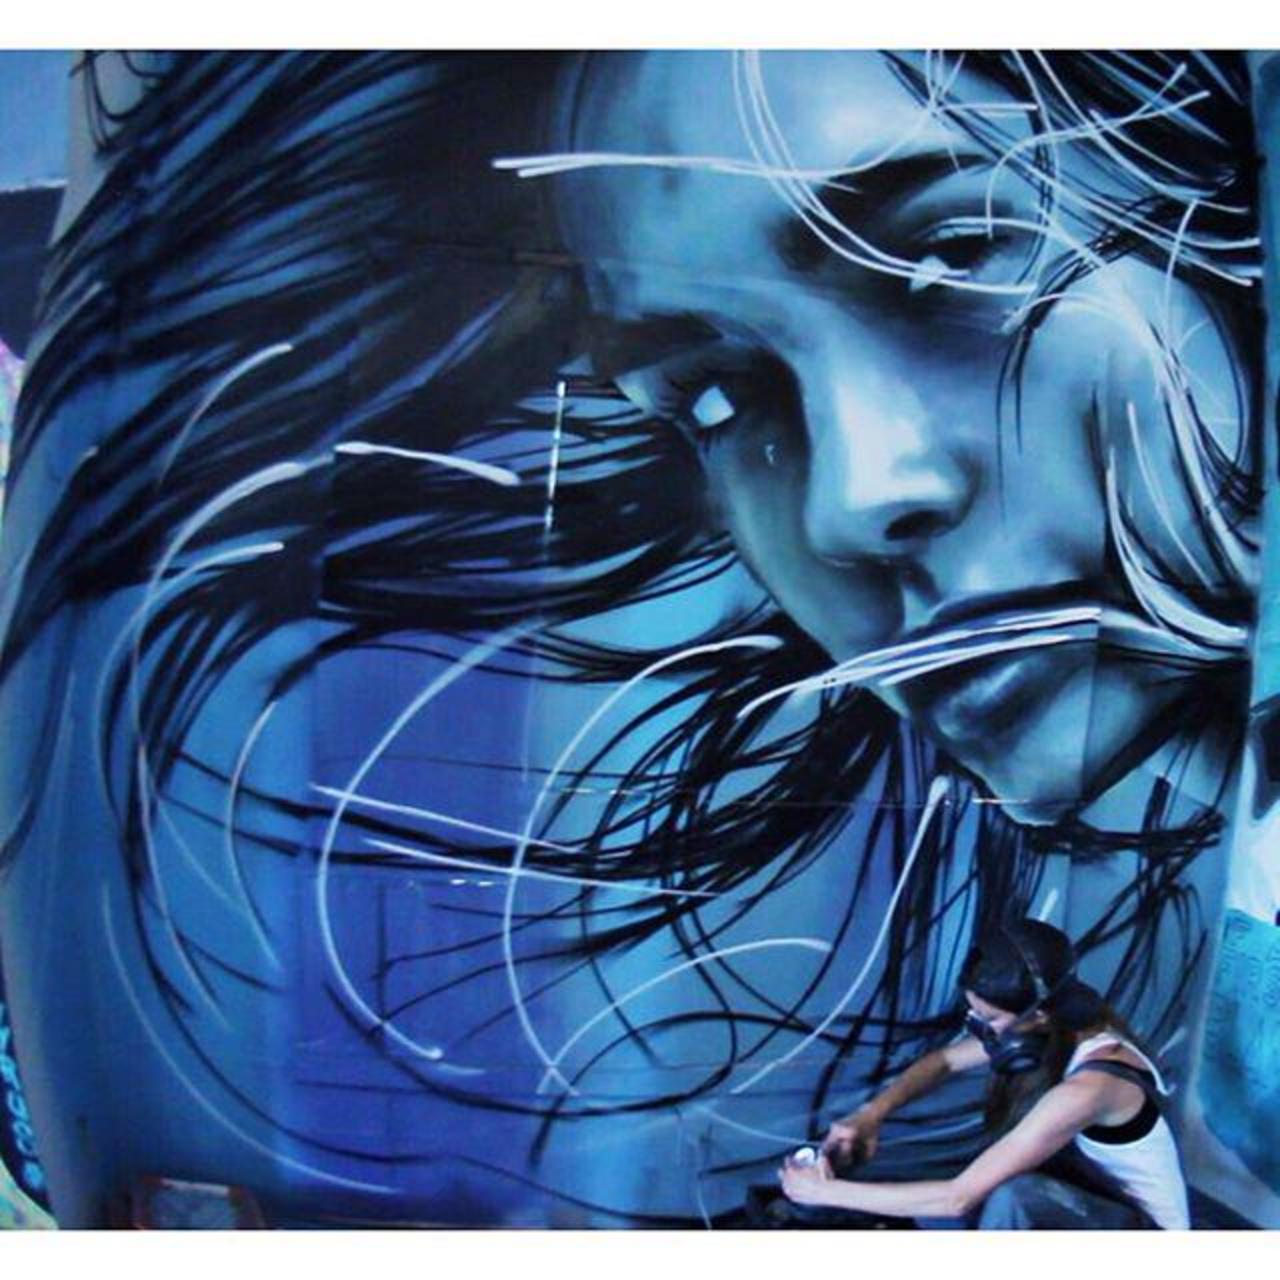 RT @cakozlem76: Christina Angelina #streetart #UrbanArt #graffiti http://t.co/y6HGOwD3E2